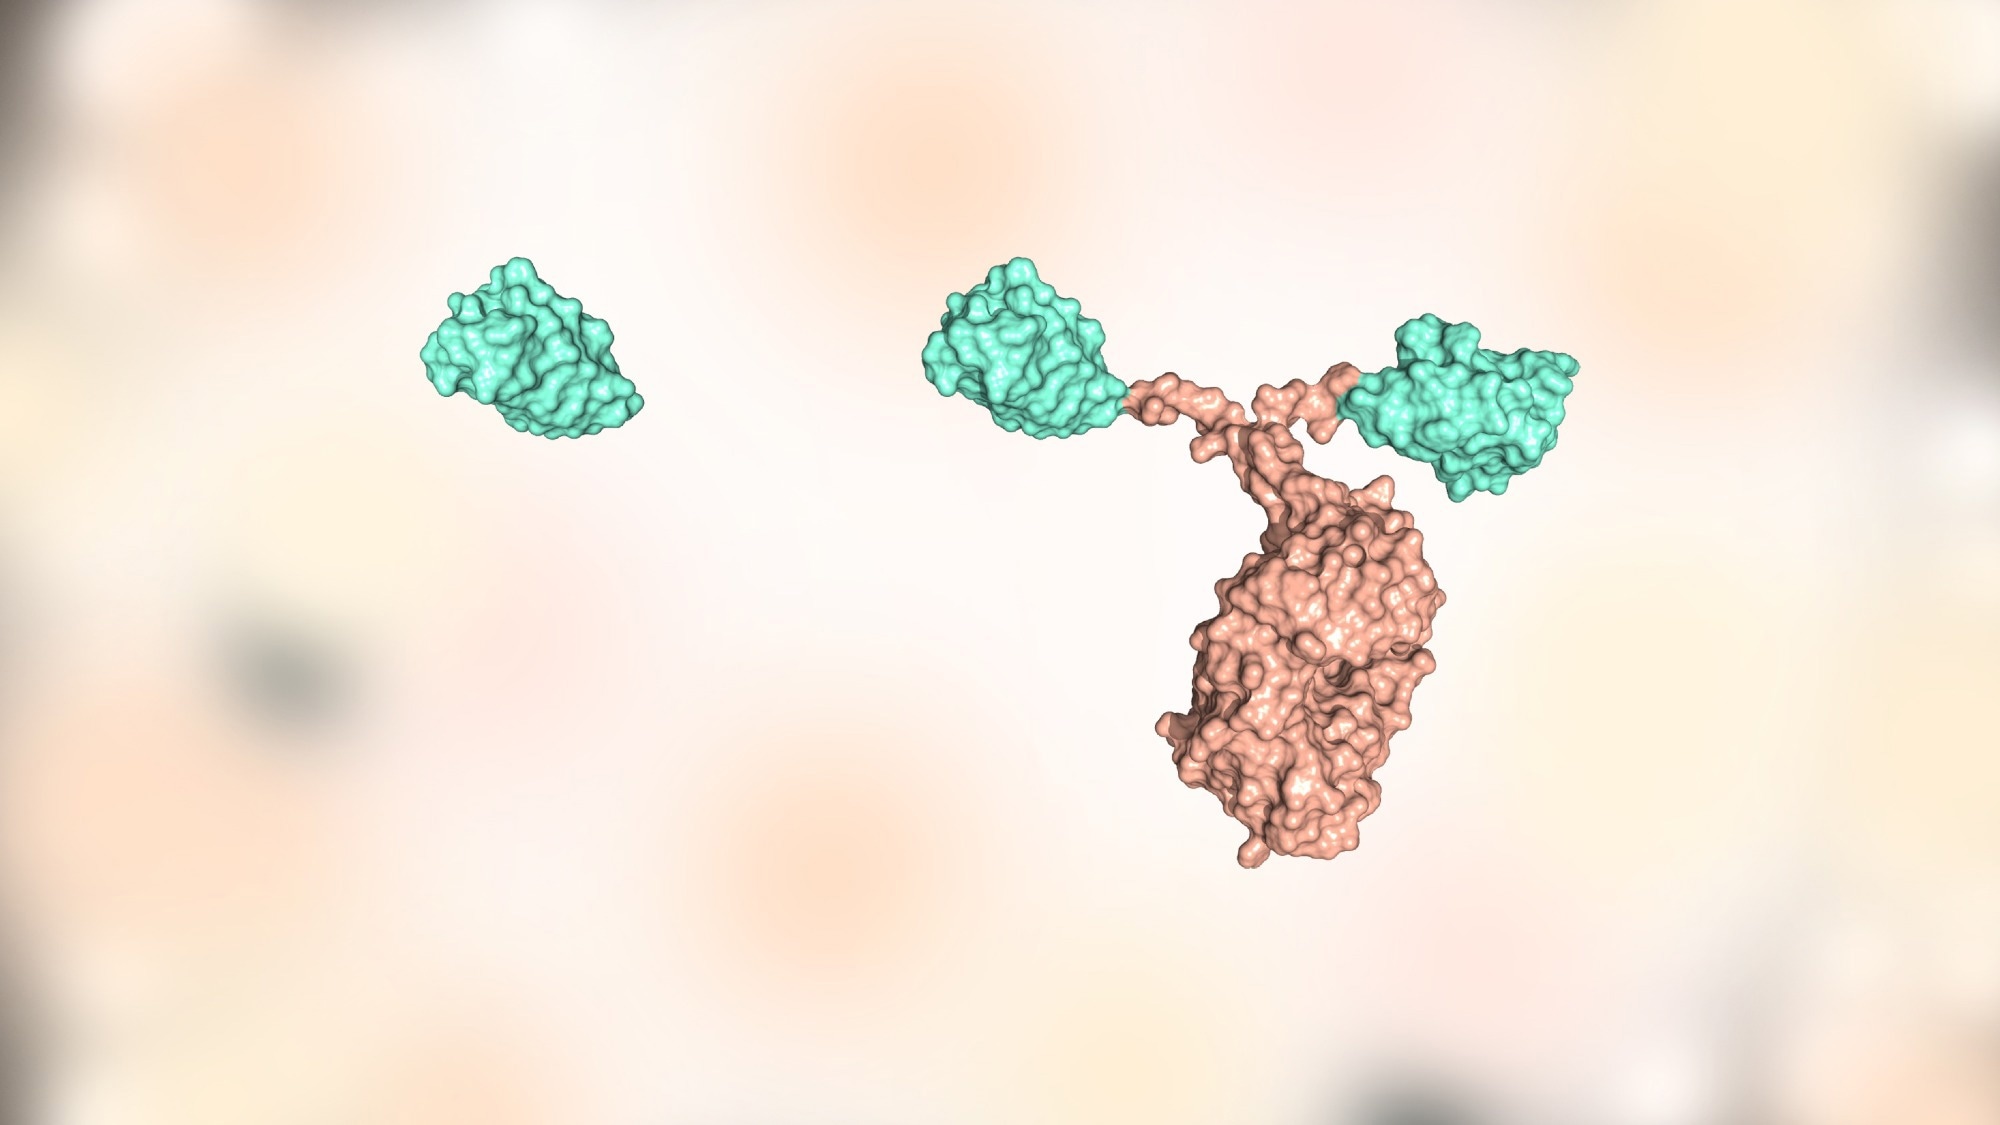 Study: SARS-CoV-2 antibodies recognize 23 distinct epitopic sites on the receptor binding domain. Image Credit: Huen Structure Bio/Shutterstock.com